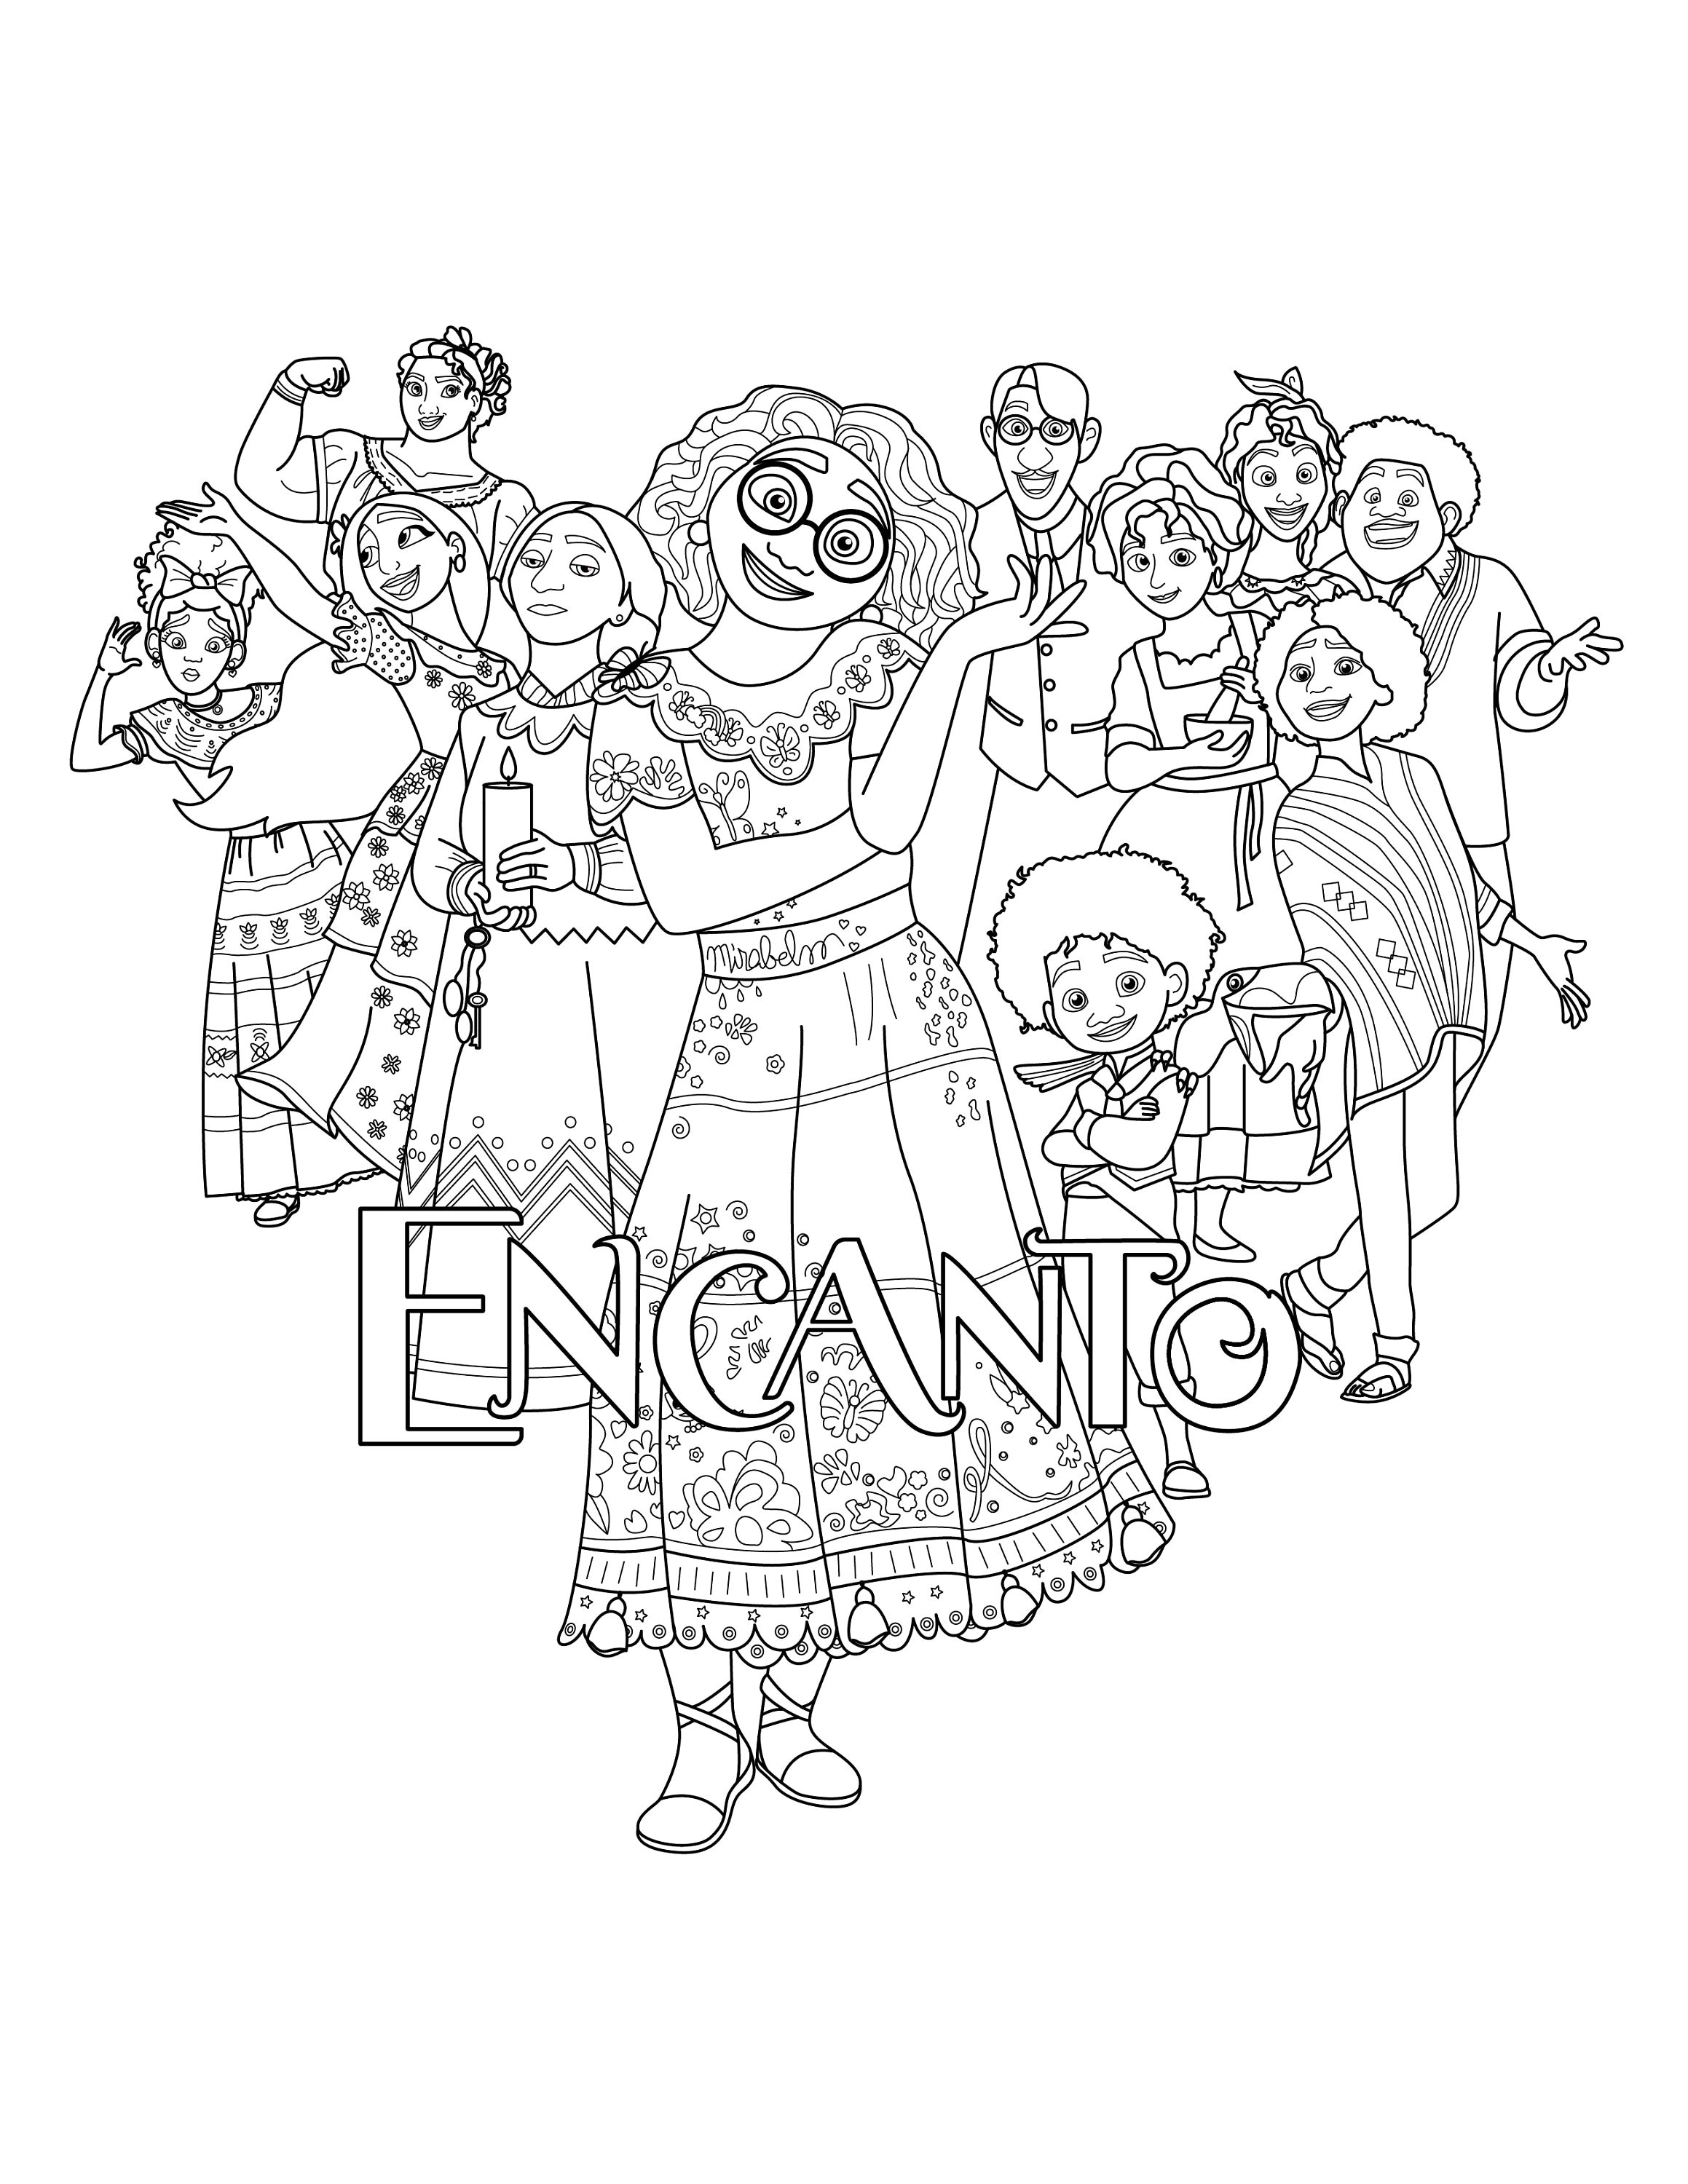 Encanto coloring page digital encanto coloring page pdf instant download madrigal family encanto coloring pages maribel digital